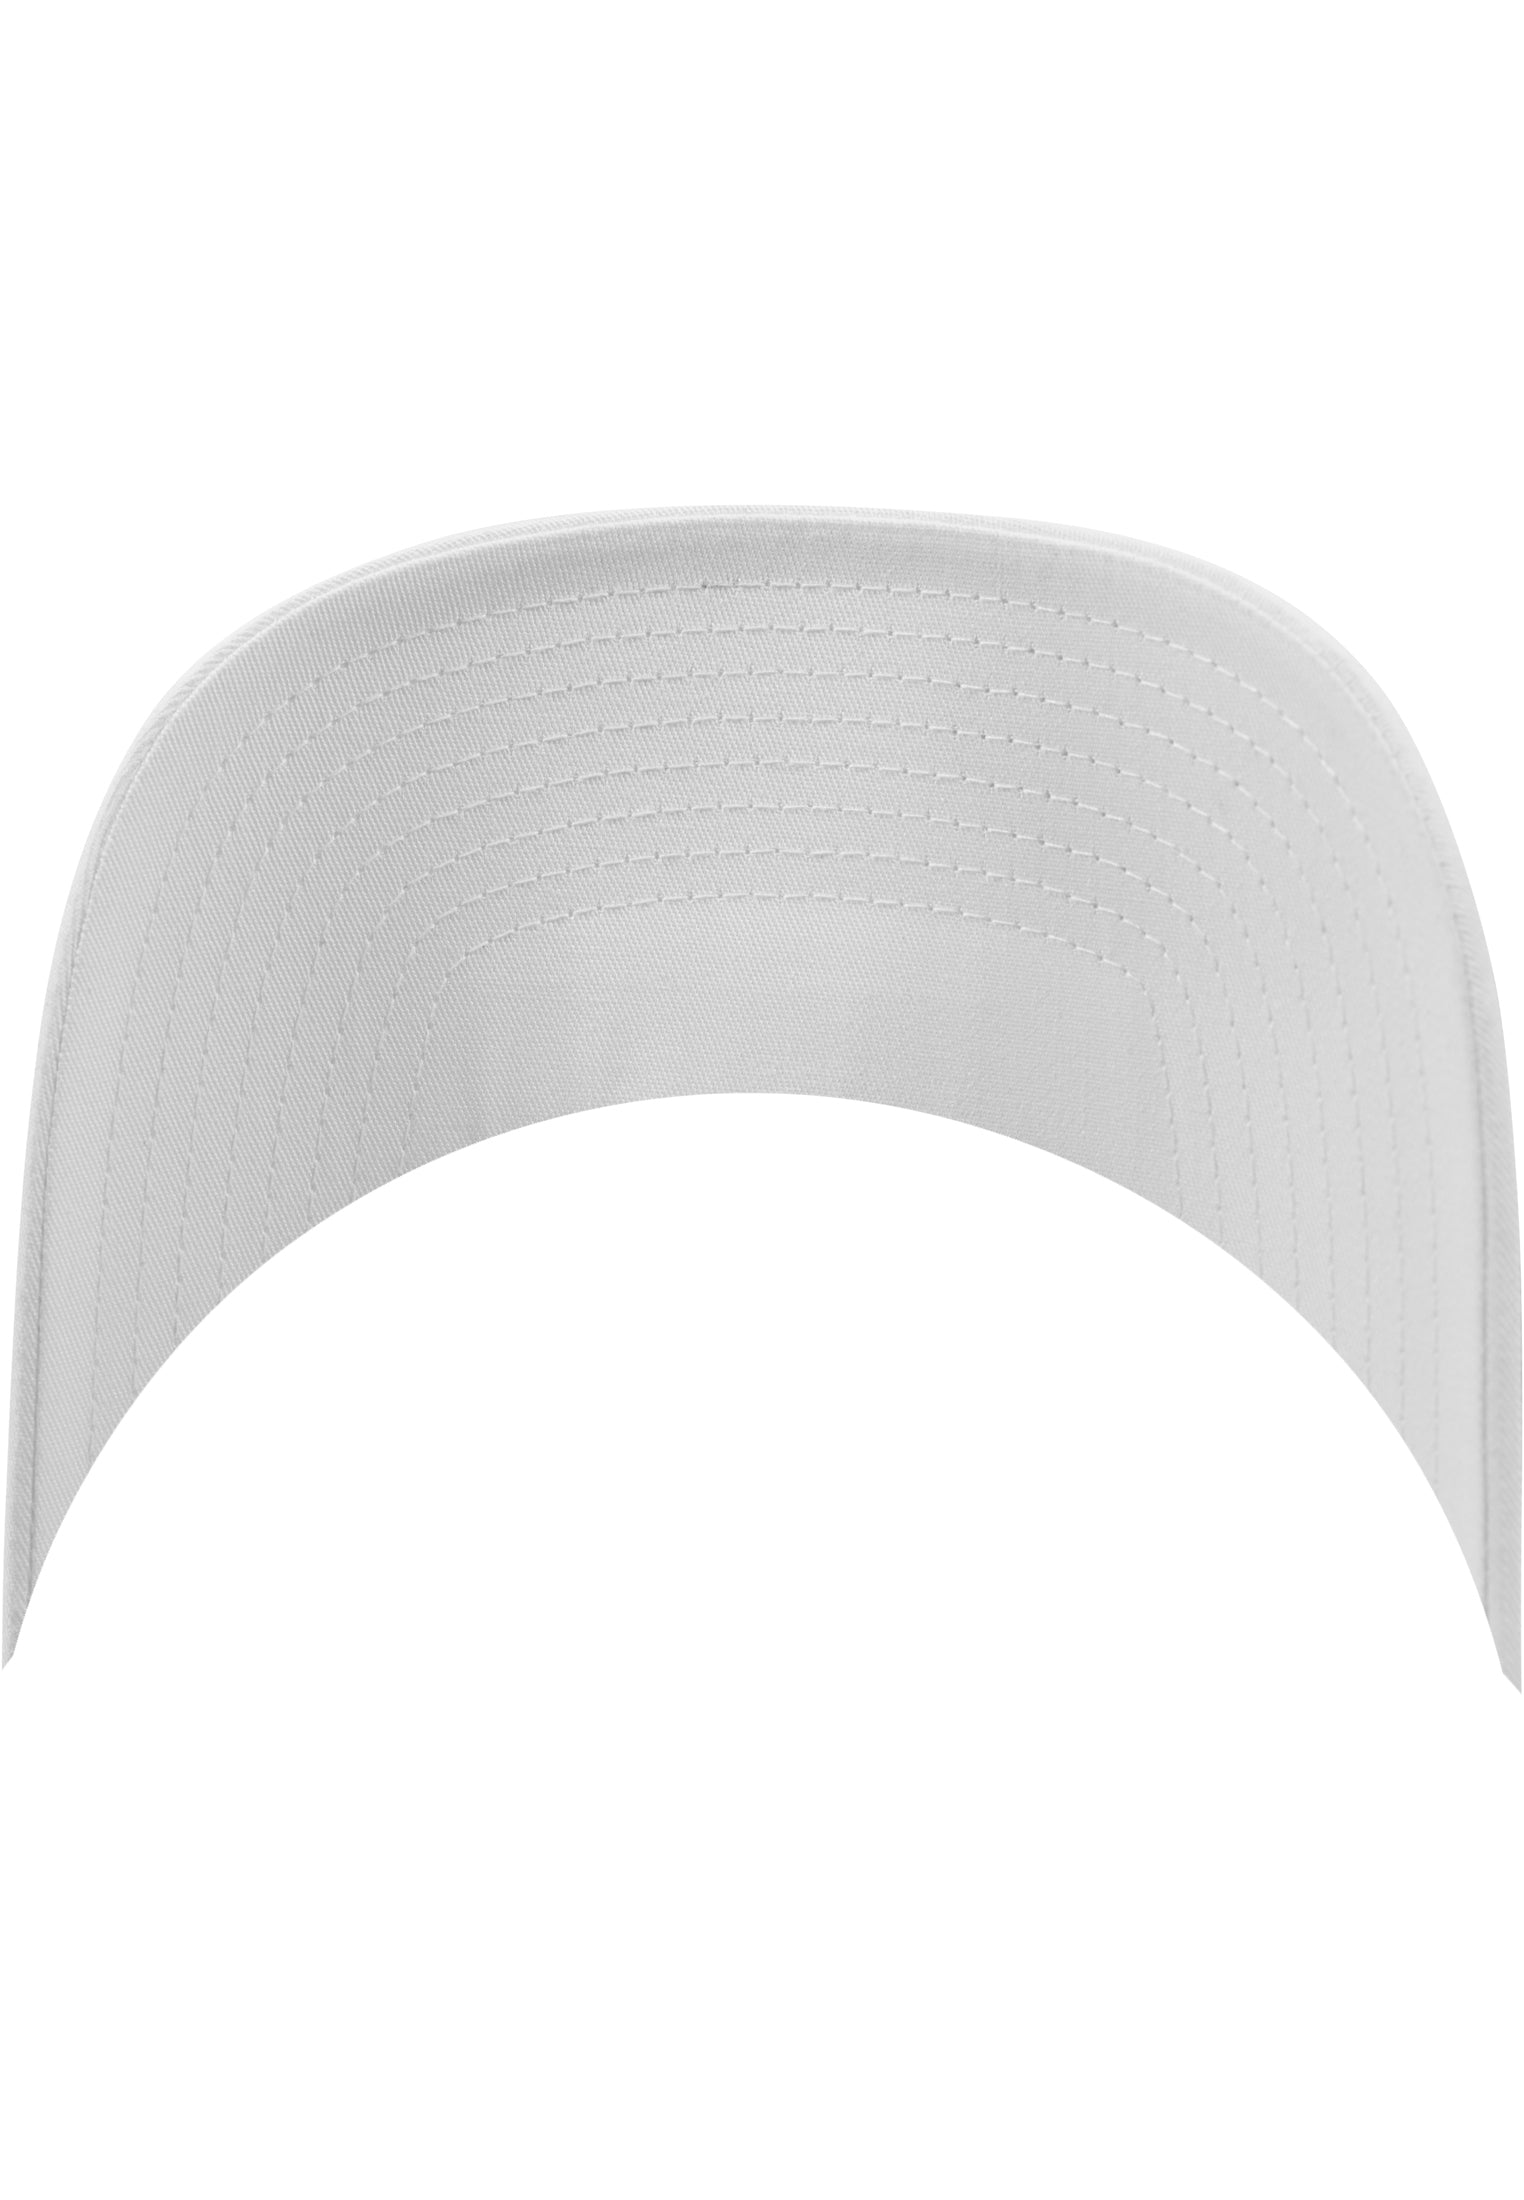 Curved Classic 110 Flexfit Snapback - White - Headz Up 